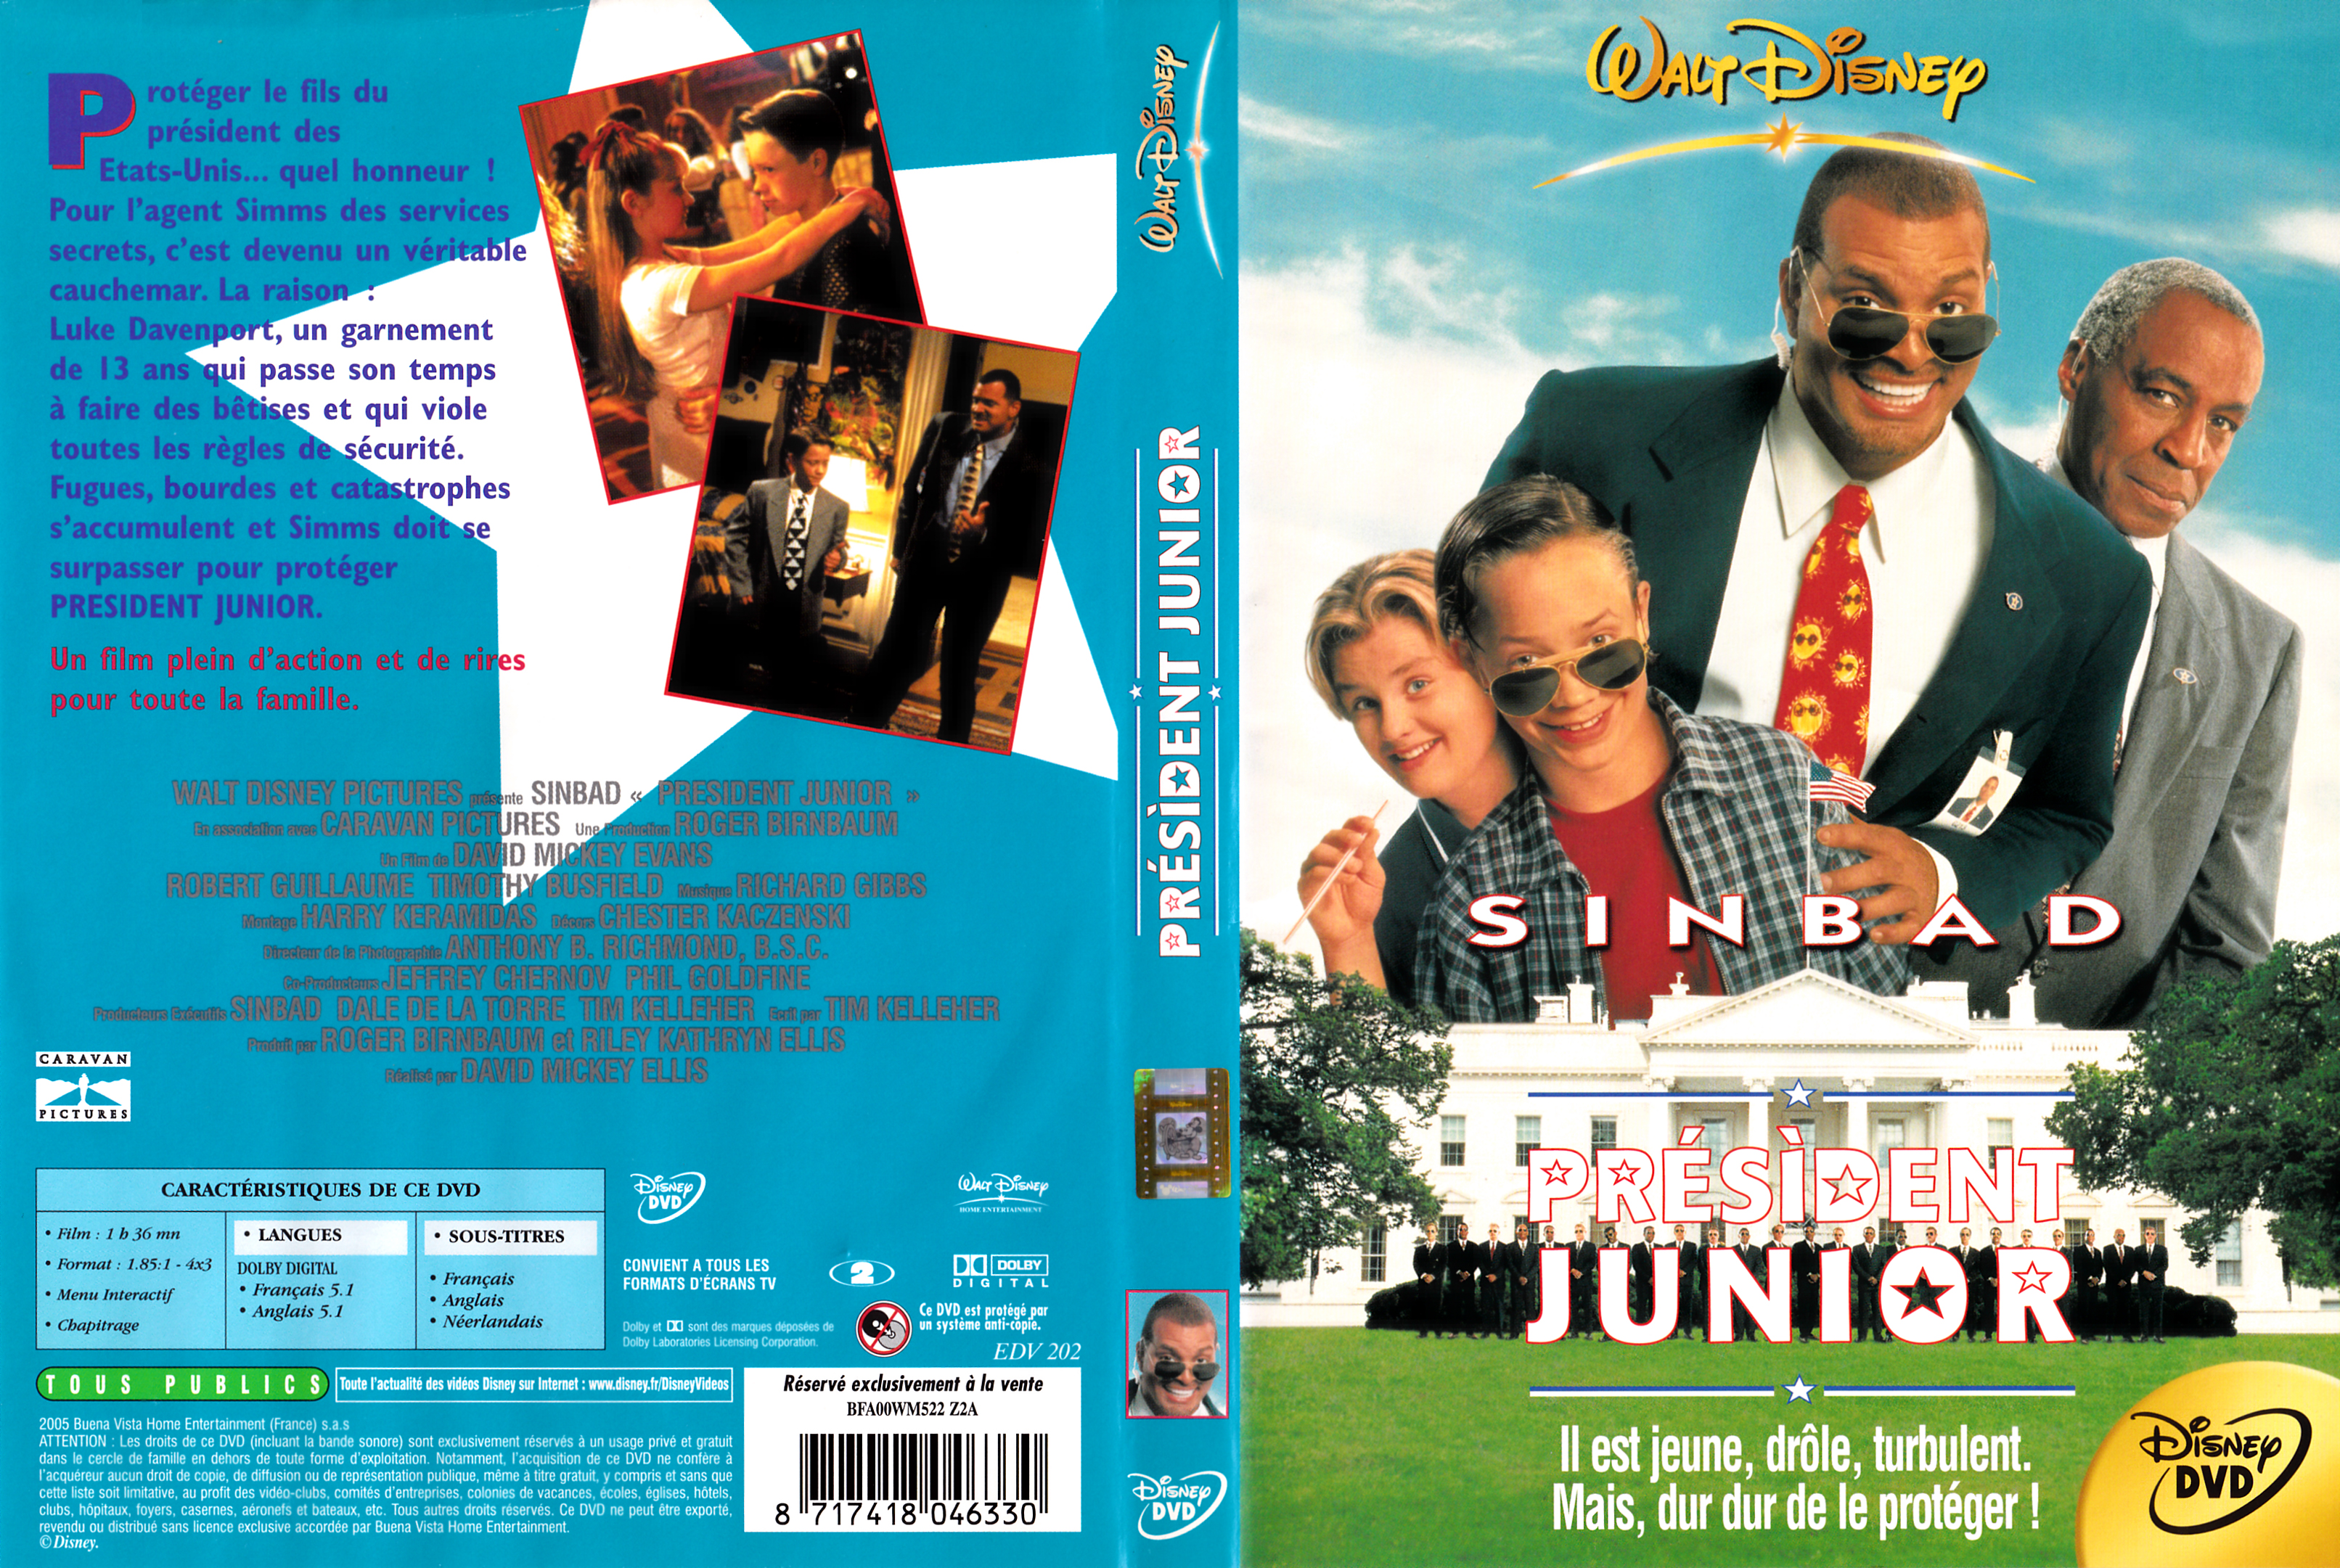 Jaquette DVD President junior